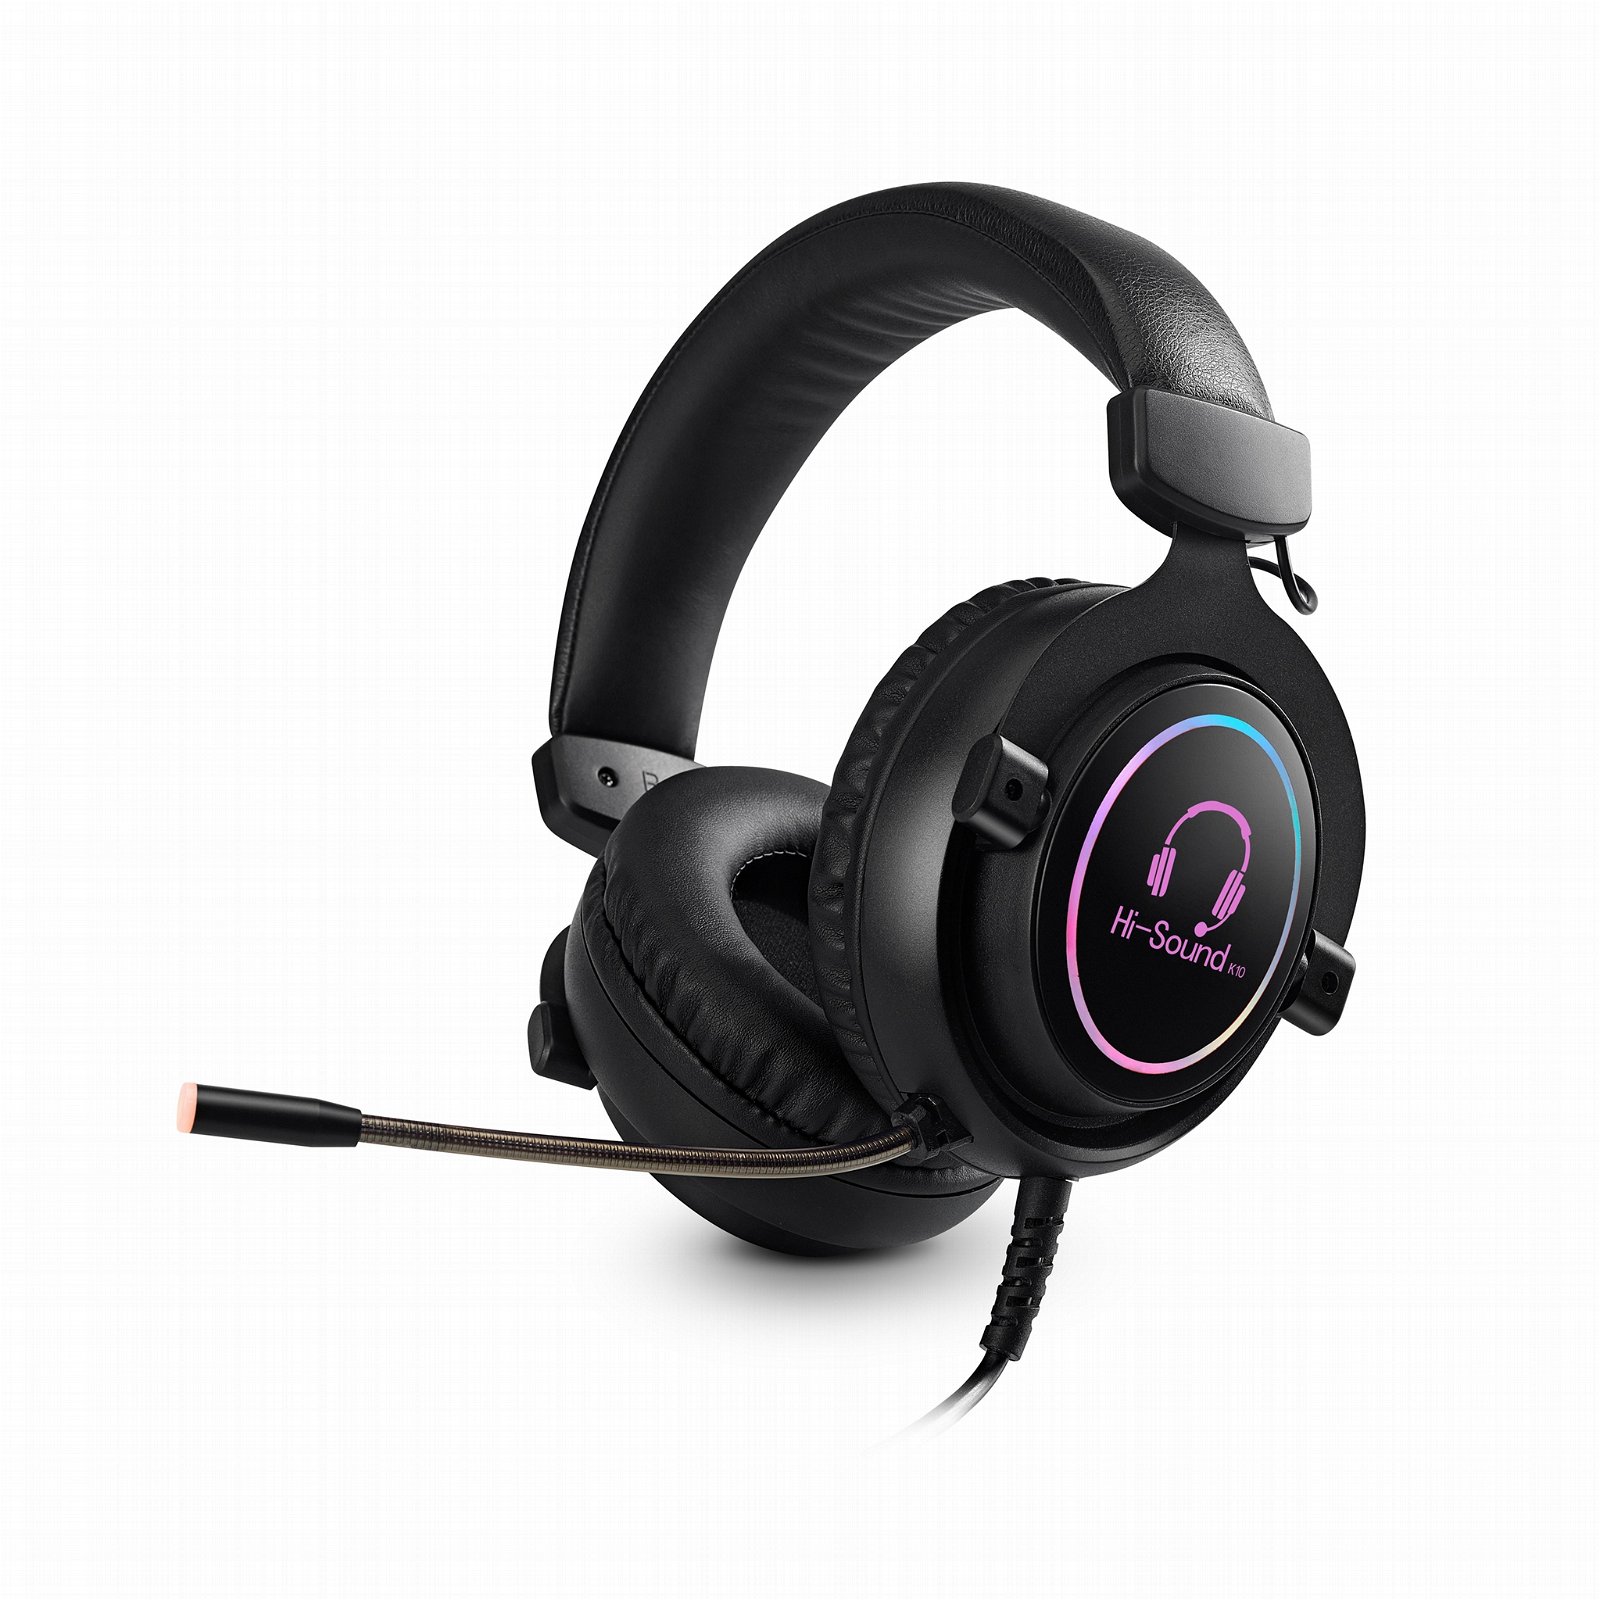 Dongguan Factory Hi-sound RGB gaming headset headphones